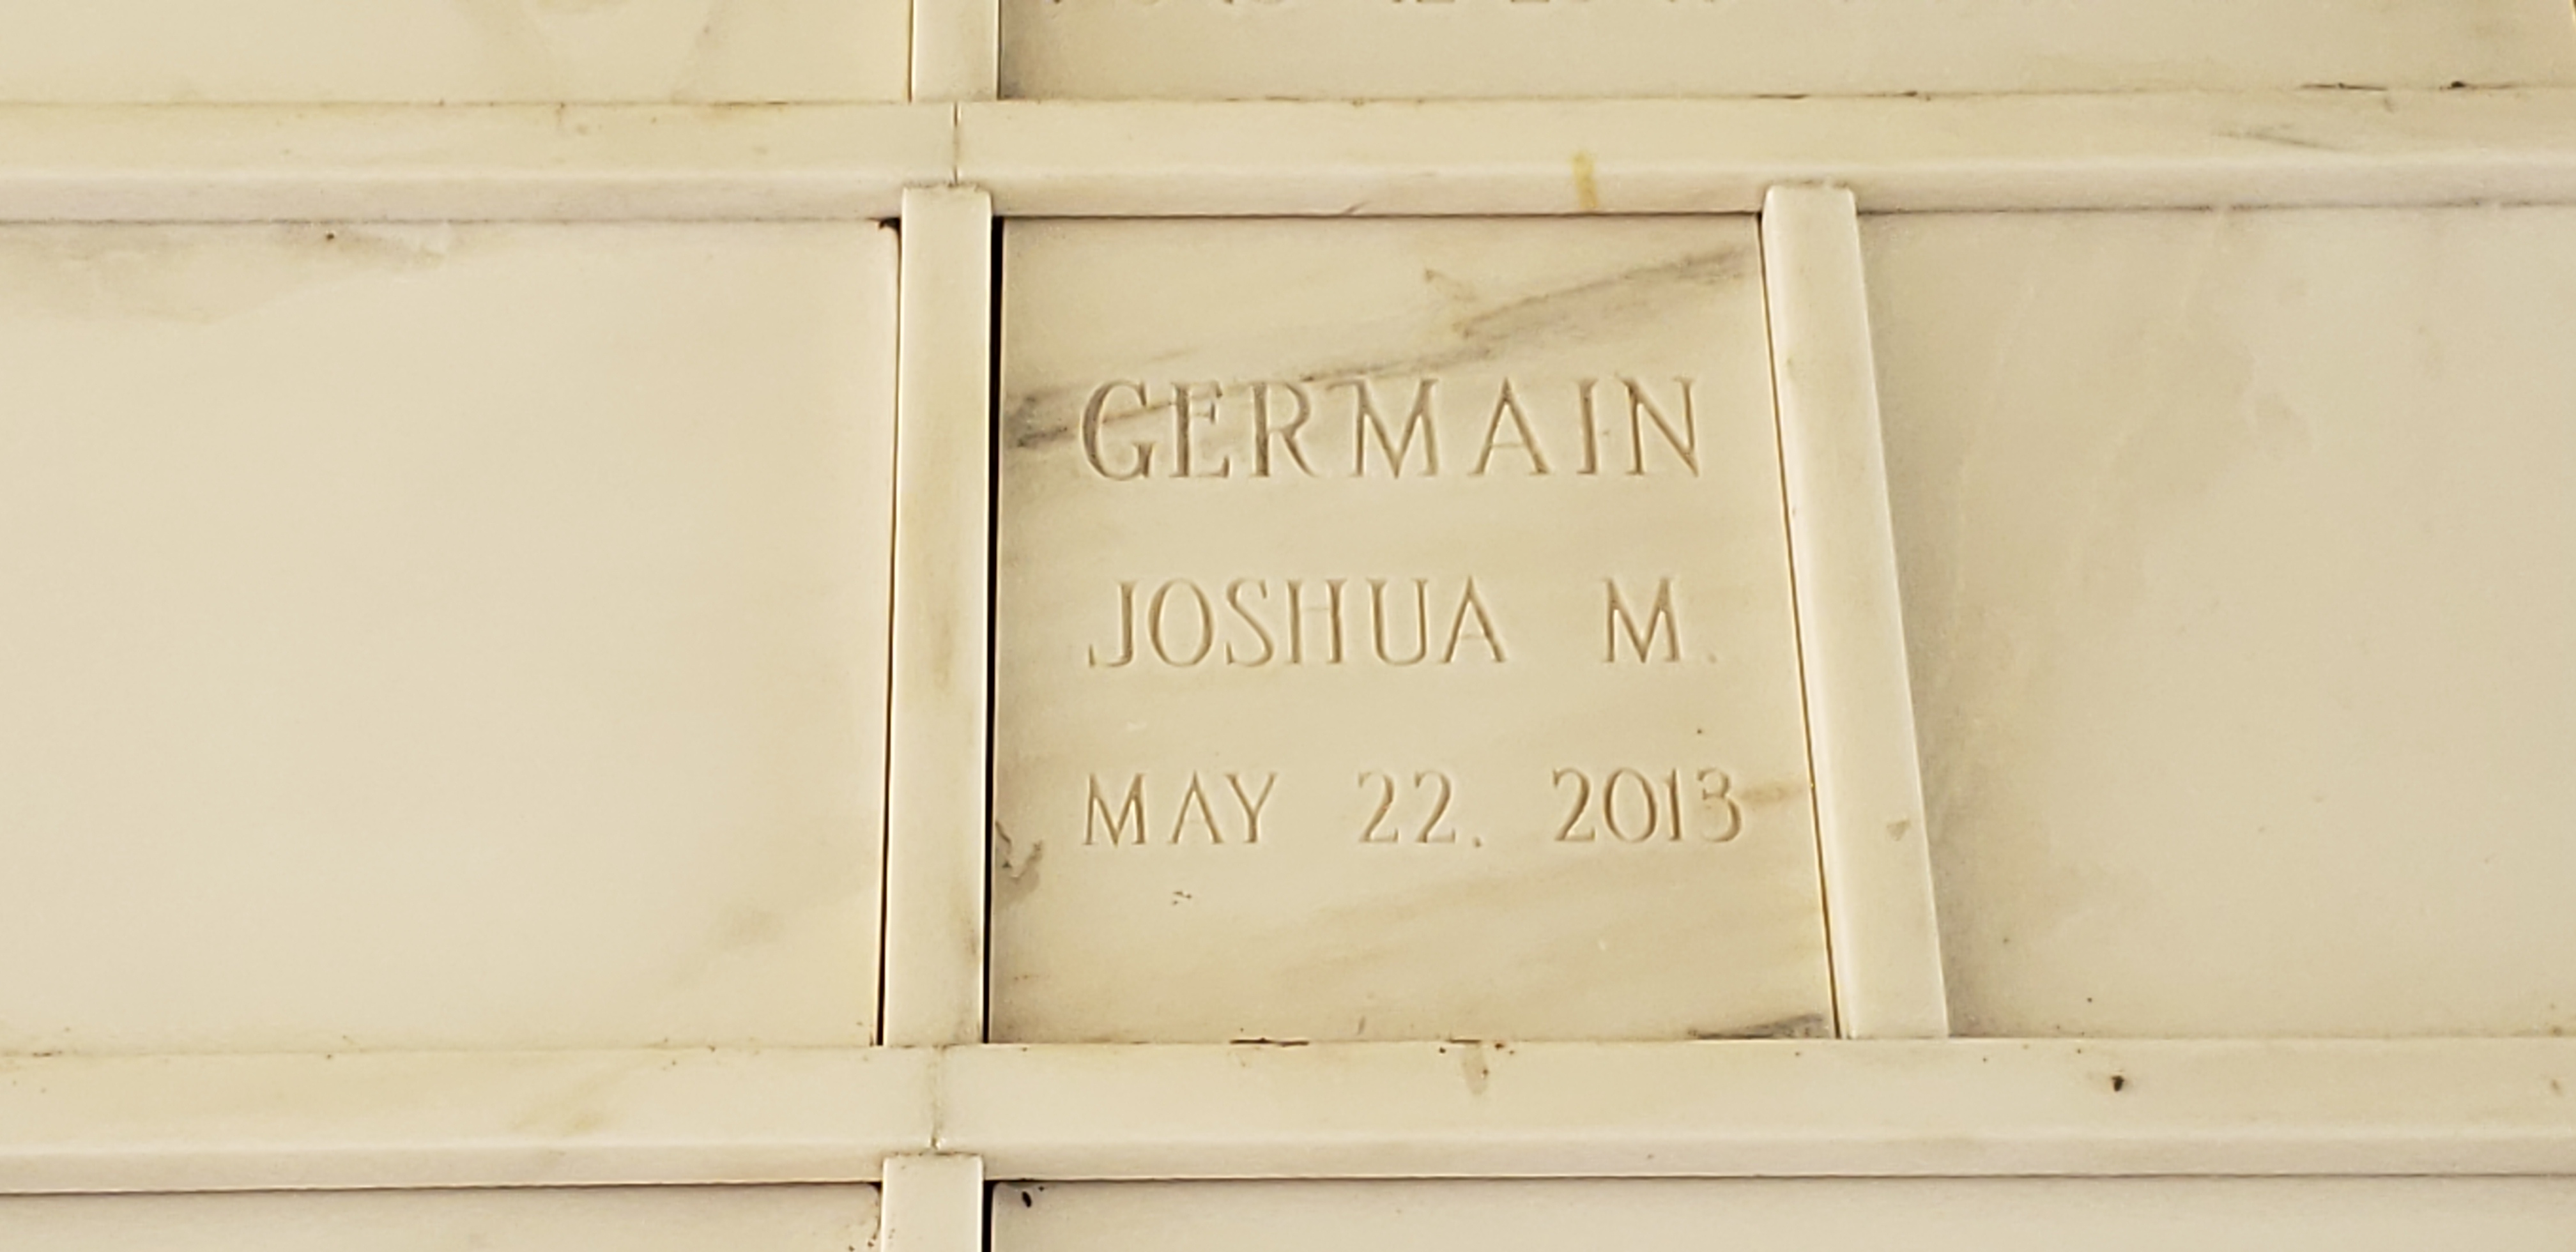 Joshua M Germain